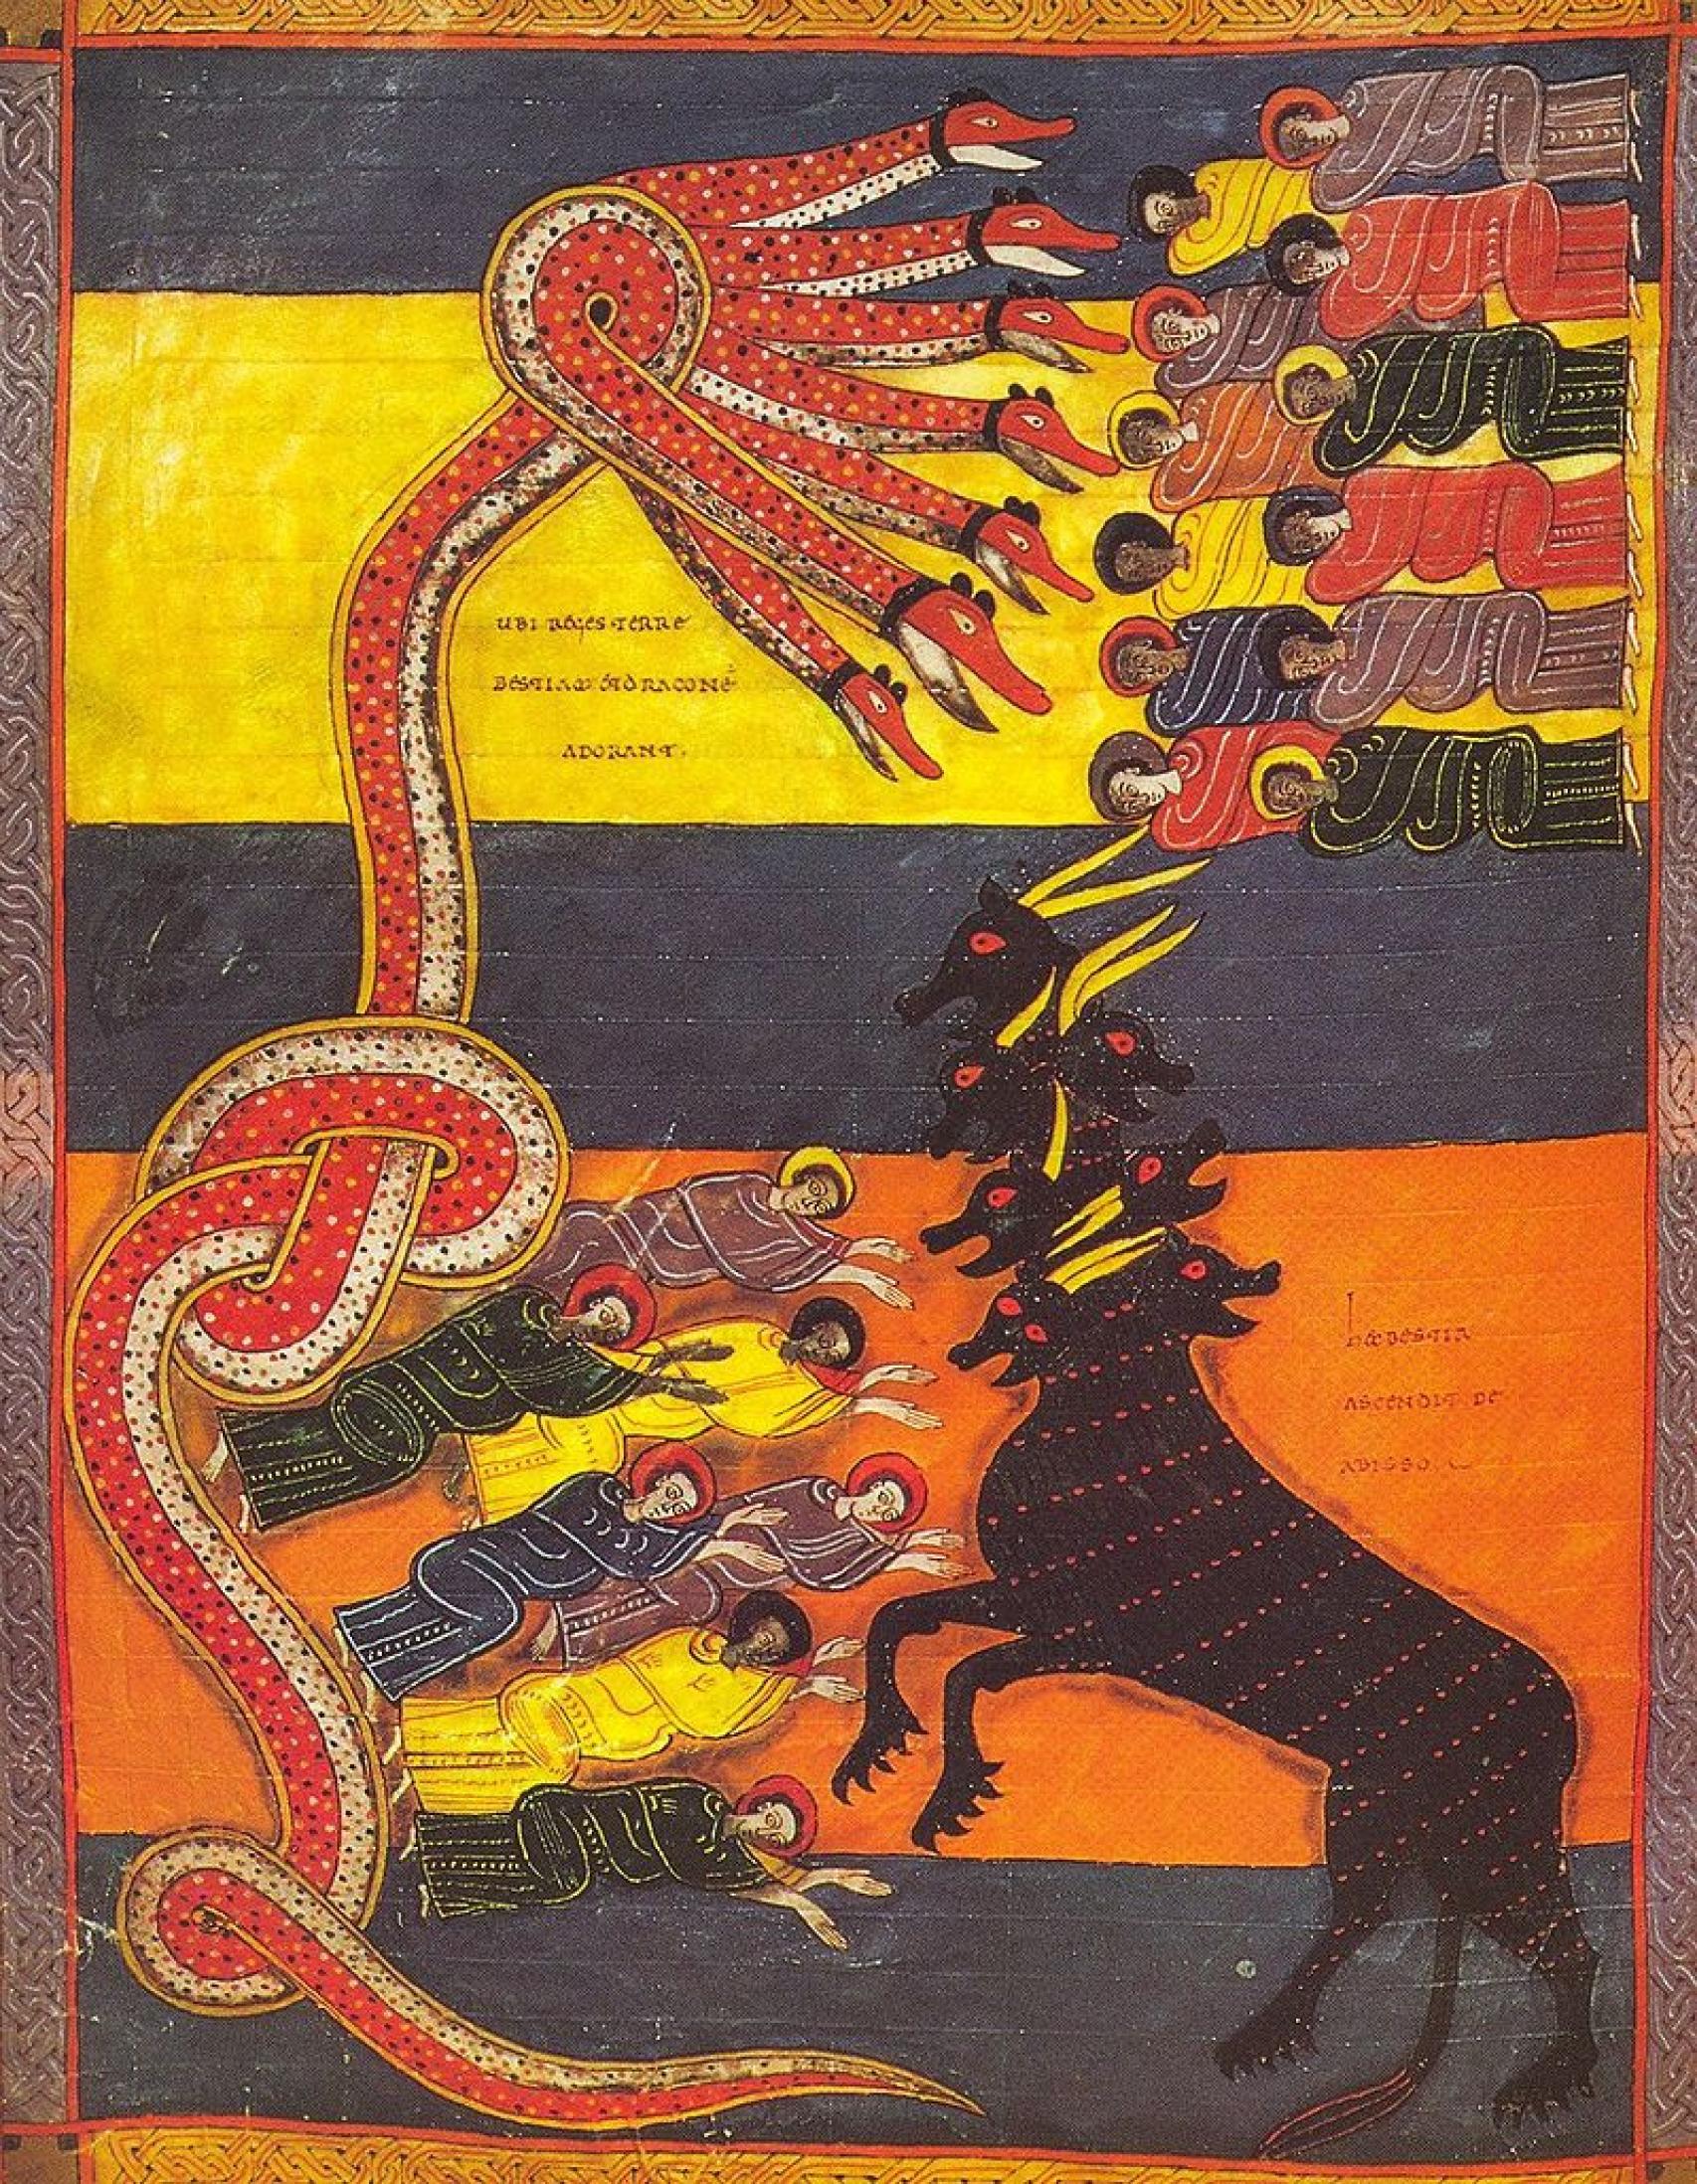 Escena del Apocalipsis ilustrada en la obra de Beato de Liébana